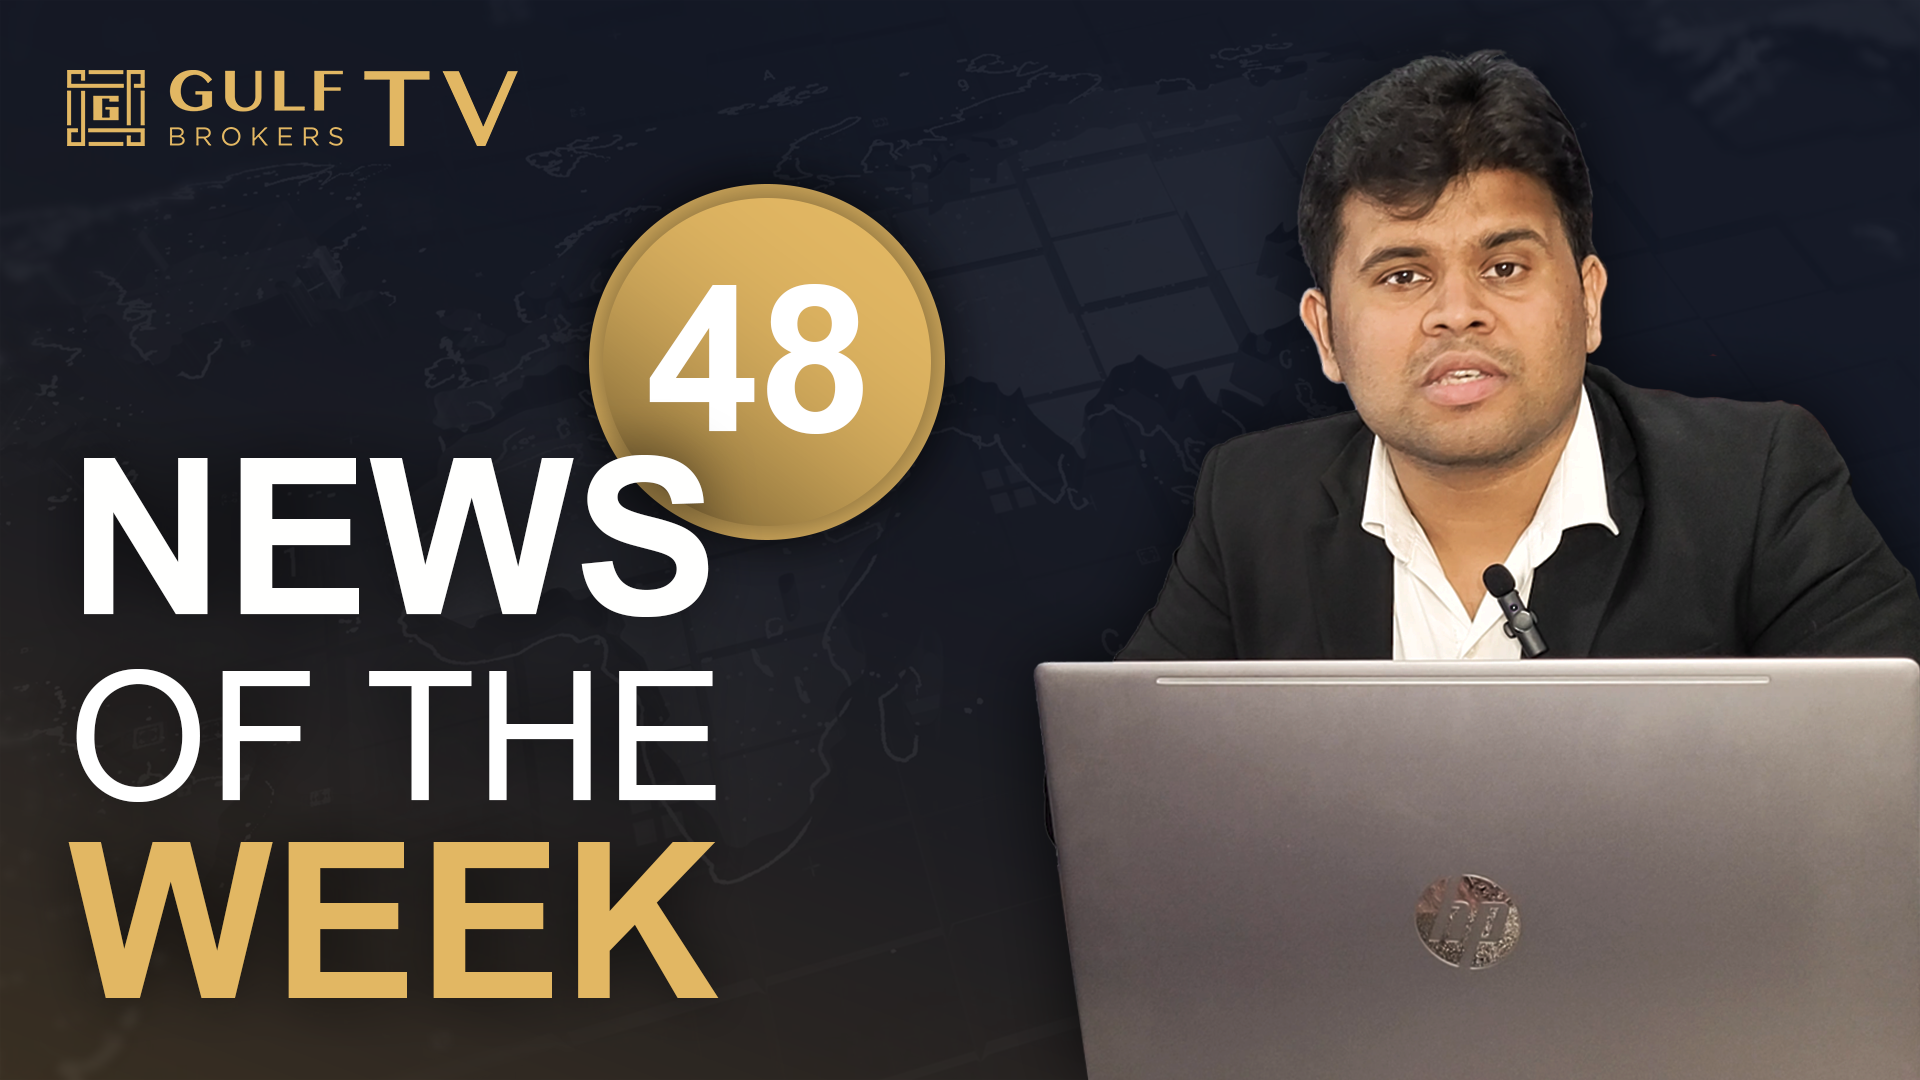 Gulfbrokers | Gulf Brokers | News of the week 48 | Syam KP